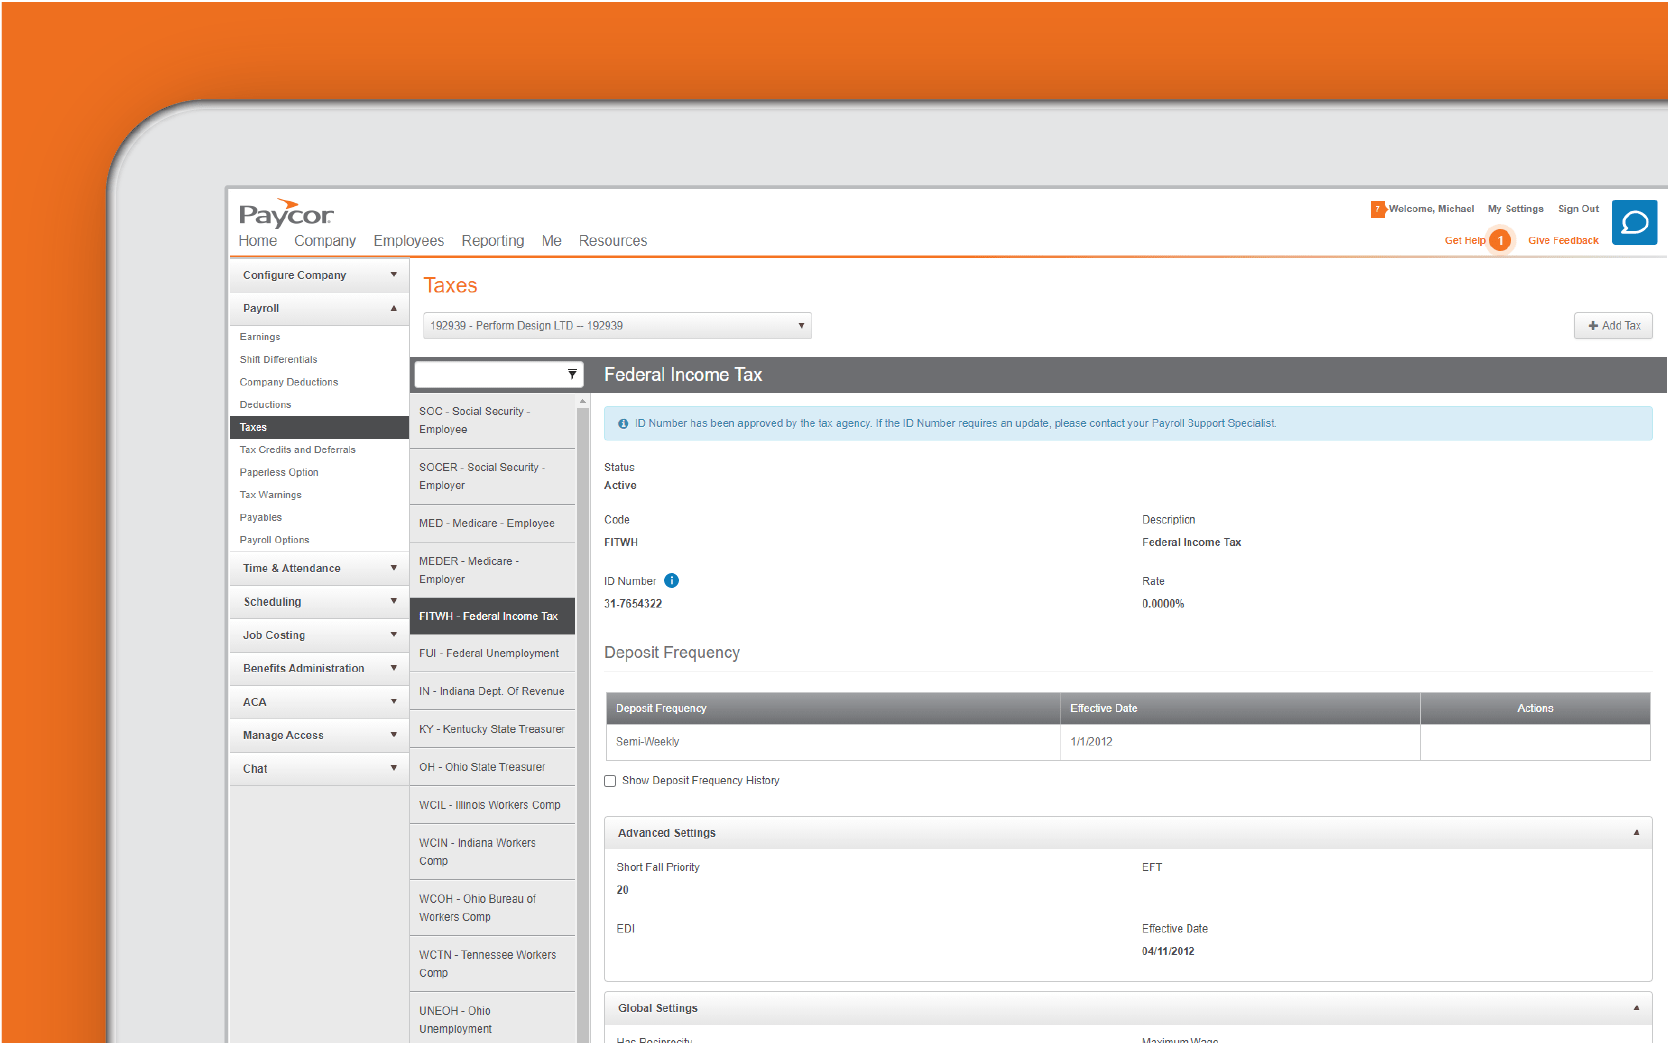 Corner of tablet showing Paycor analytics dashboard against orange background background